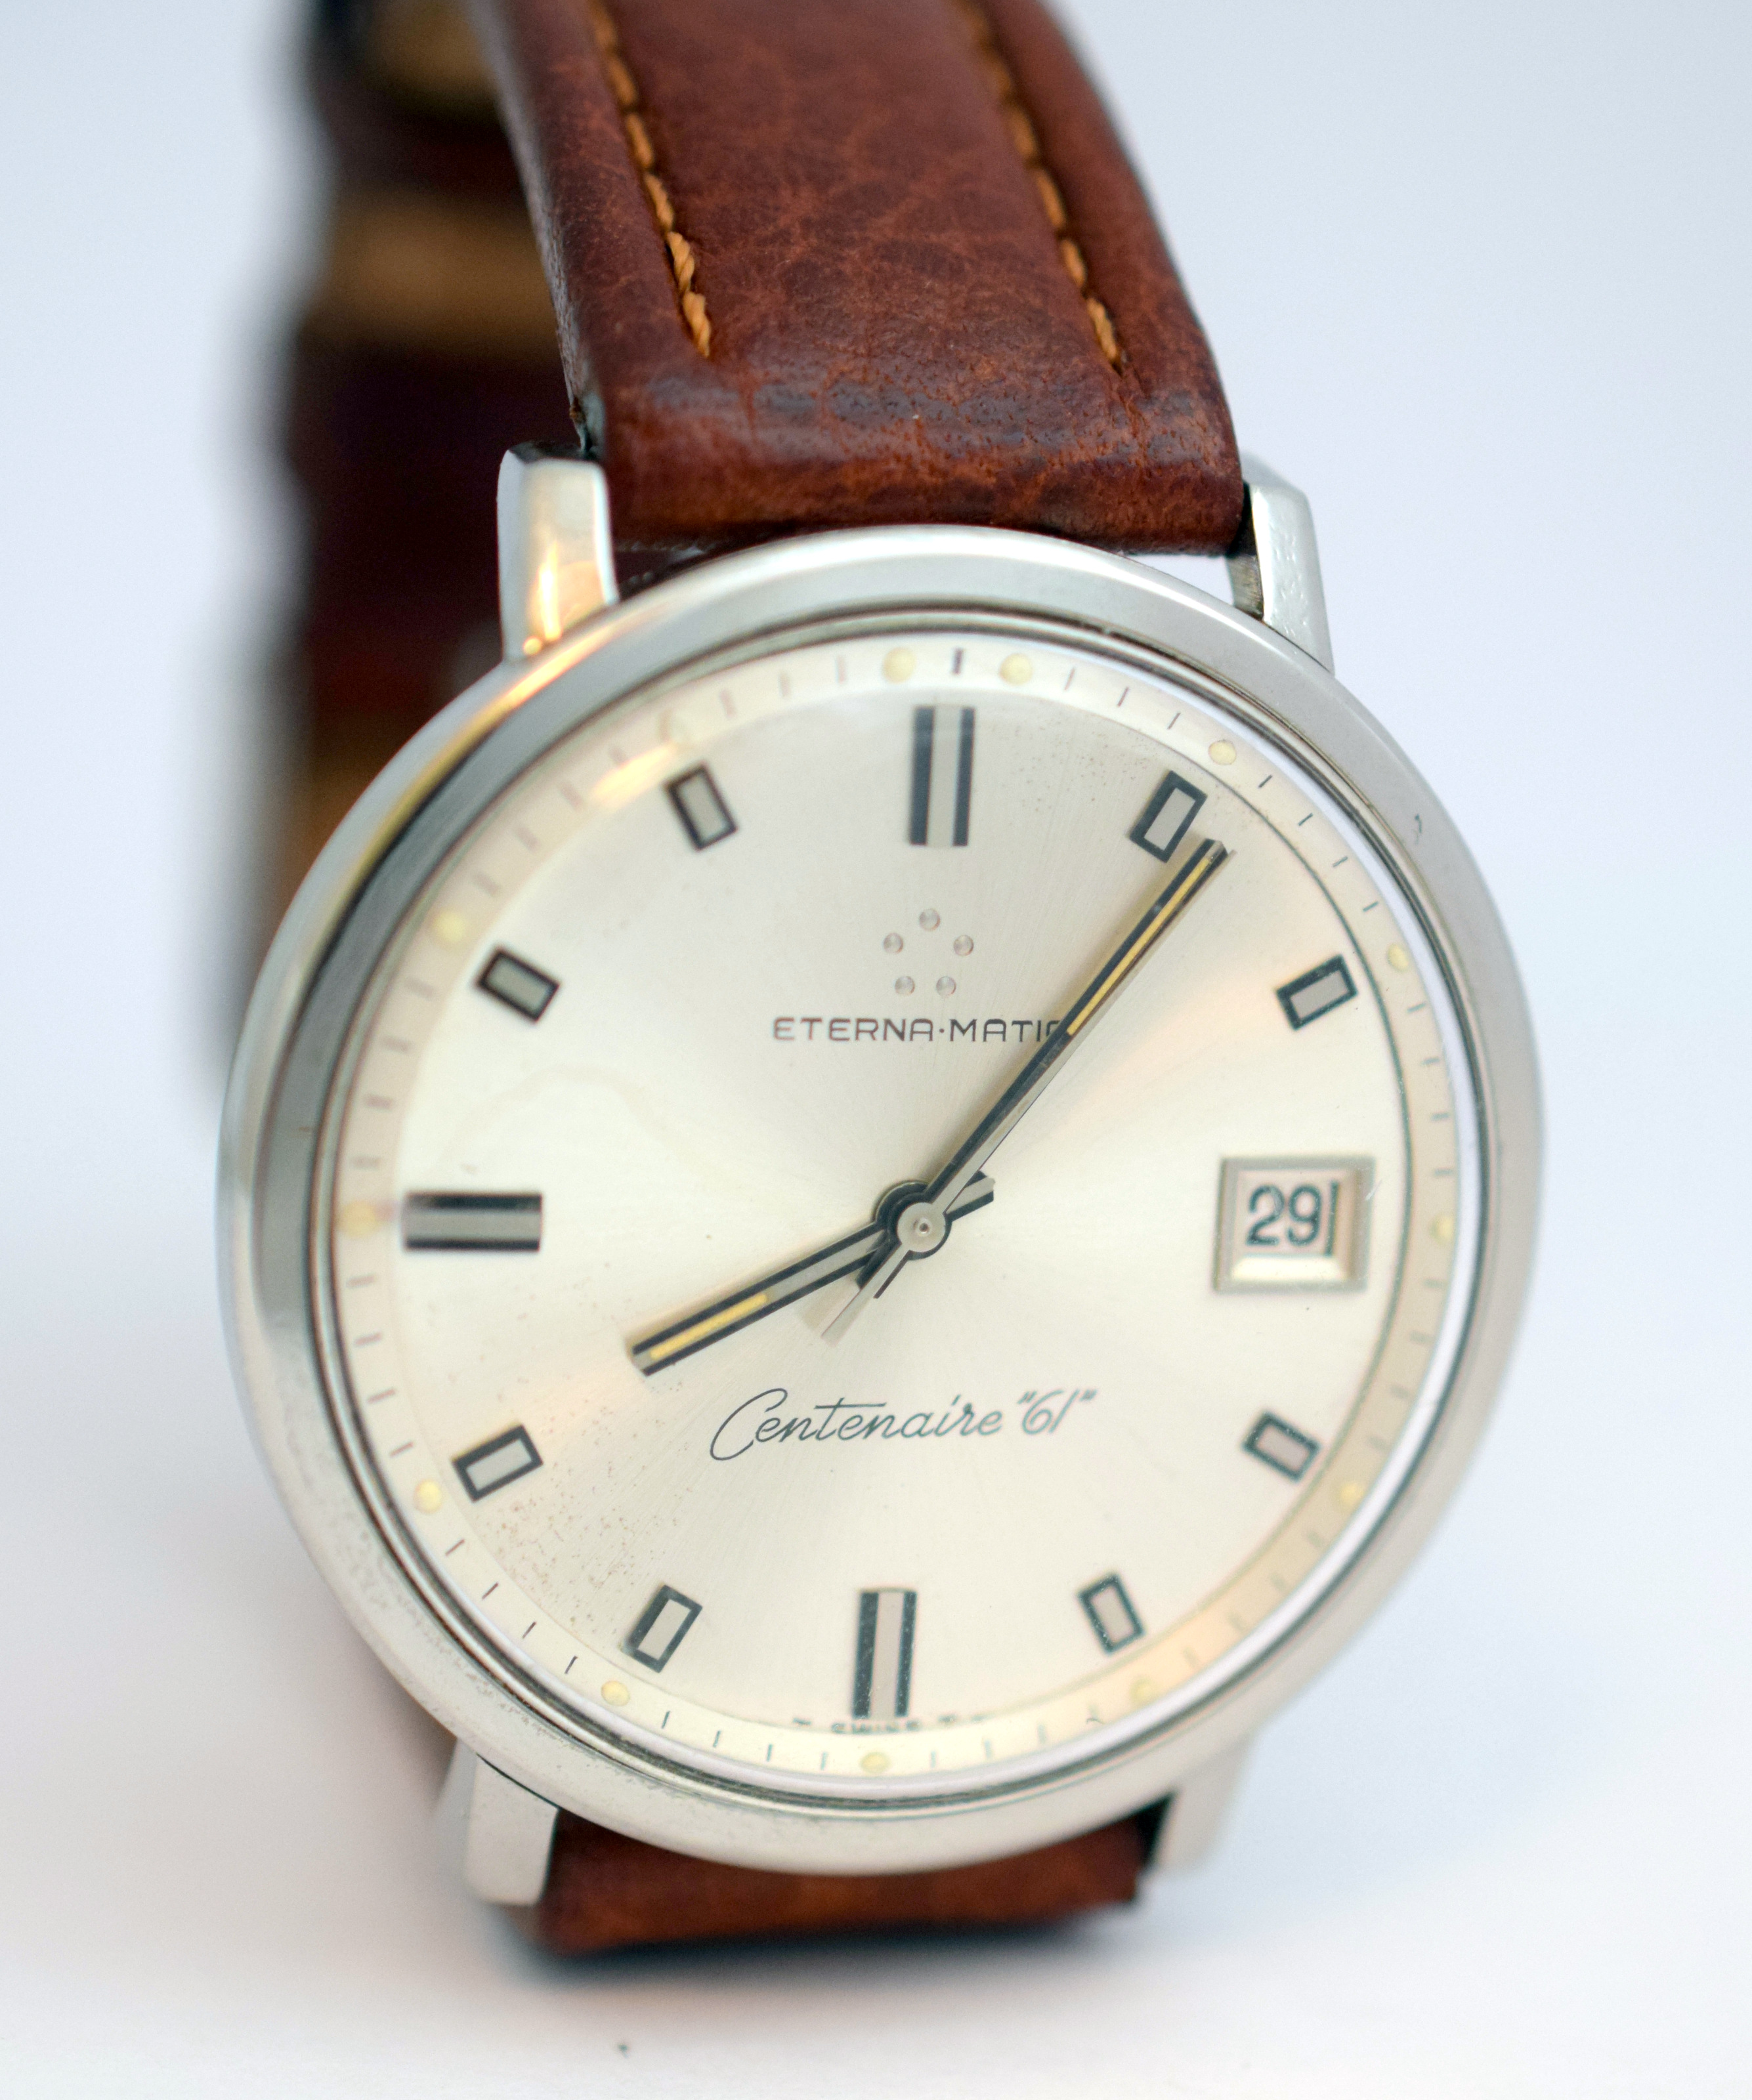 Eterna-Matic Centenaire 61 Gentleman's Automatic Wristwatch - Bild 7 aus 7